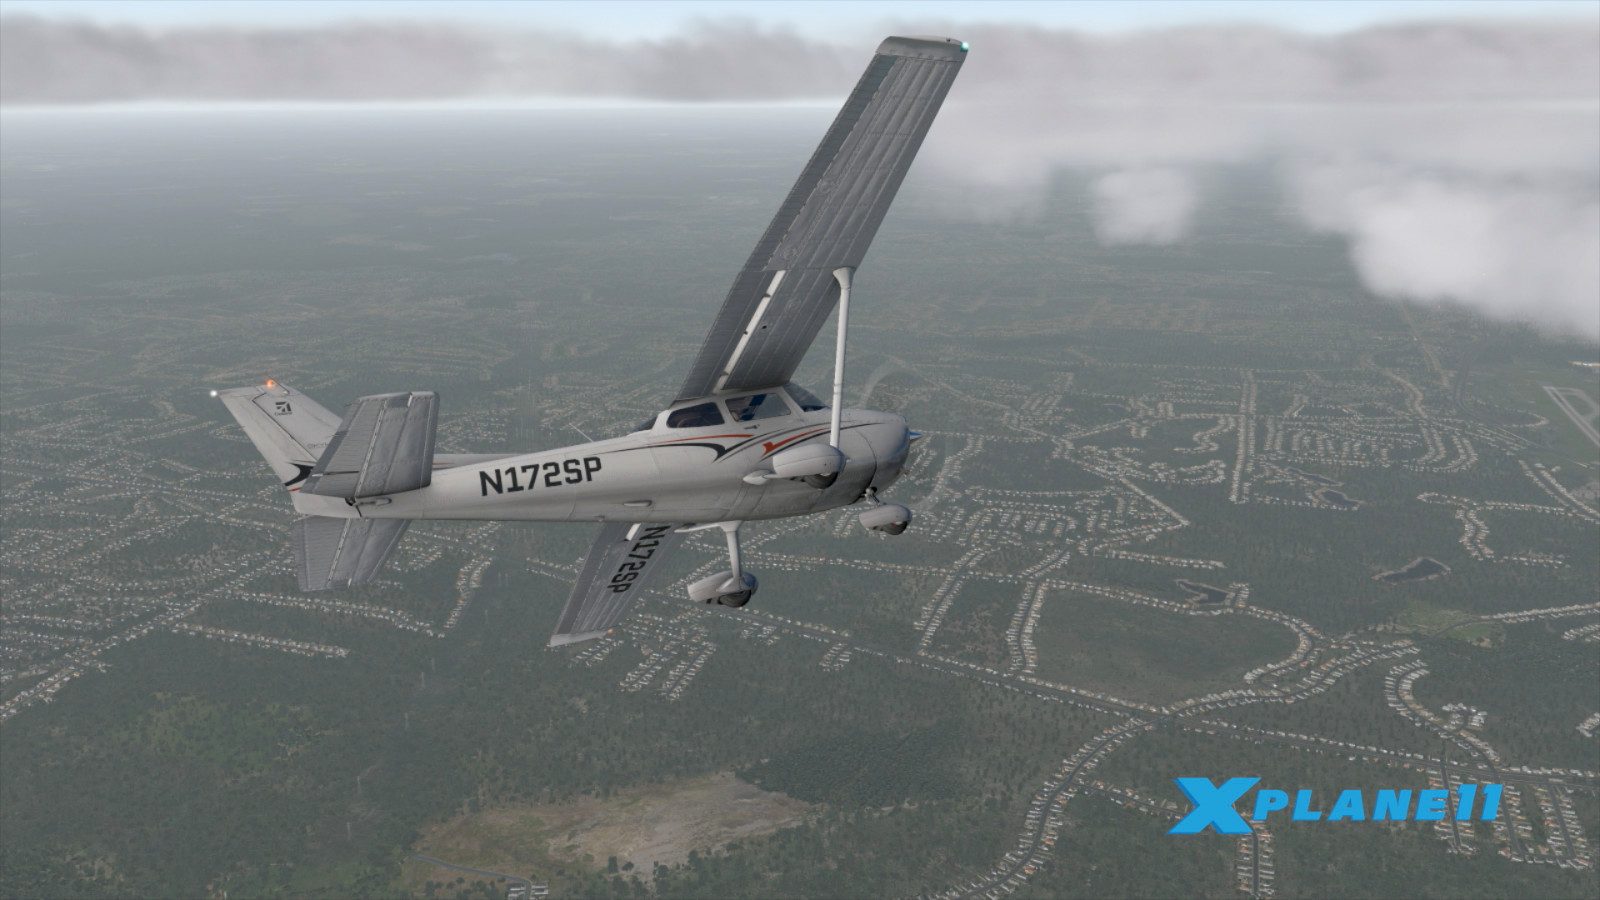 x plane flight simulation